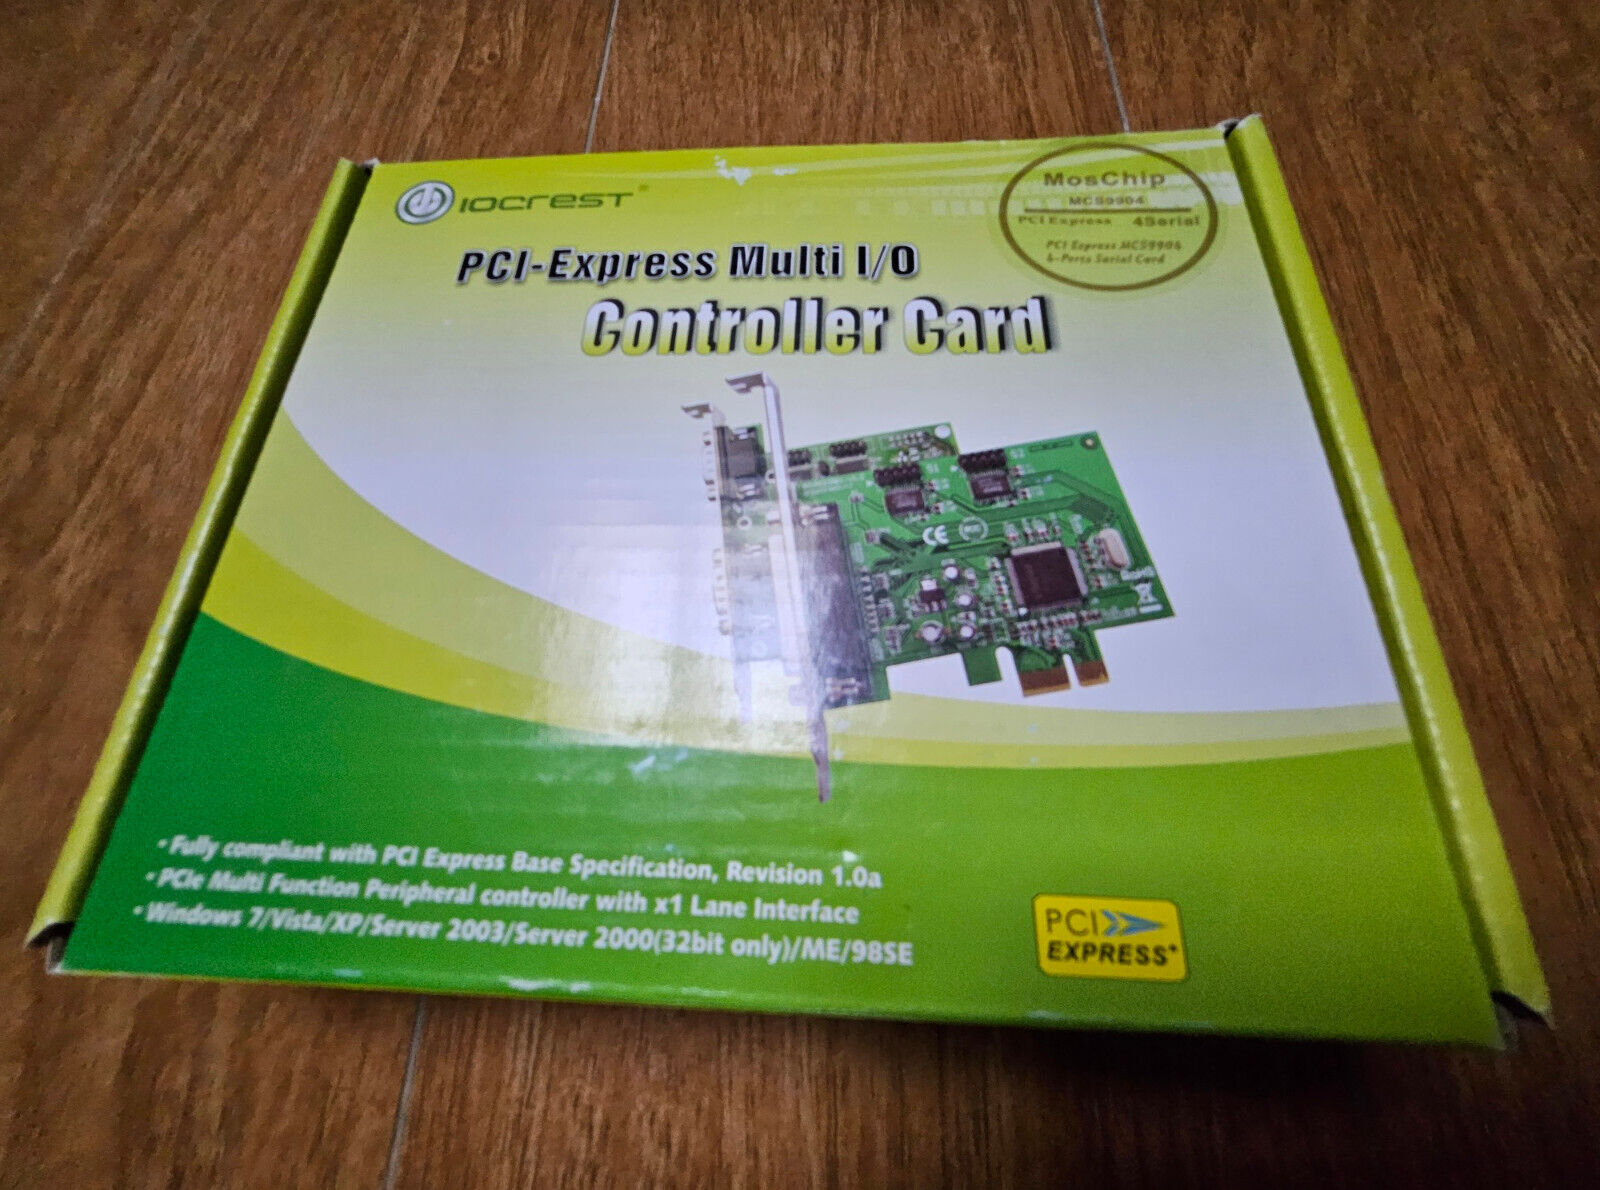 IOCREST PCI-Express Multi I/O Controller PCI Express Serial Card - MosChip